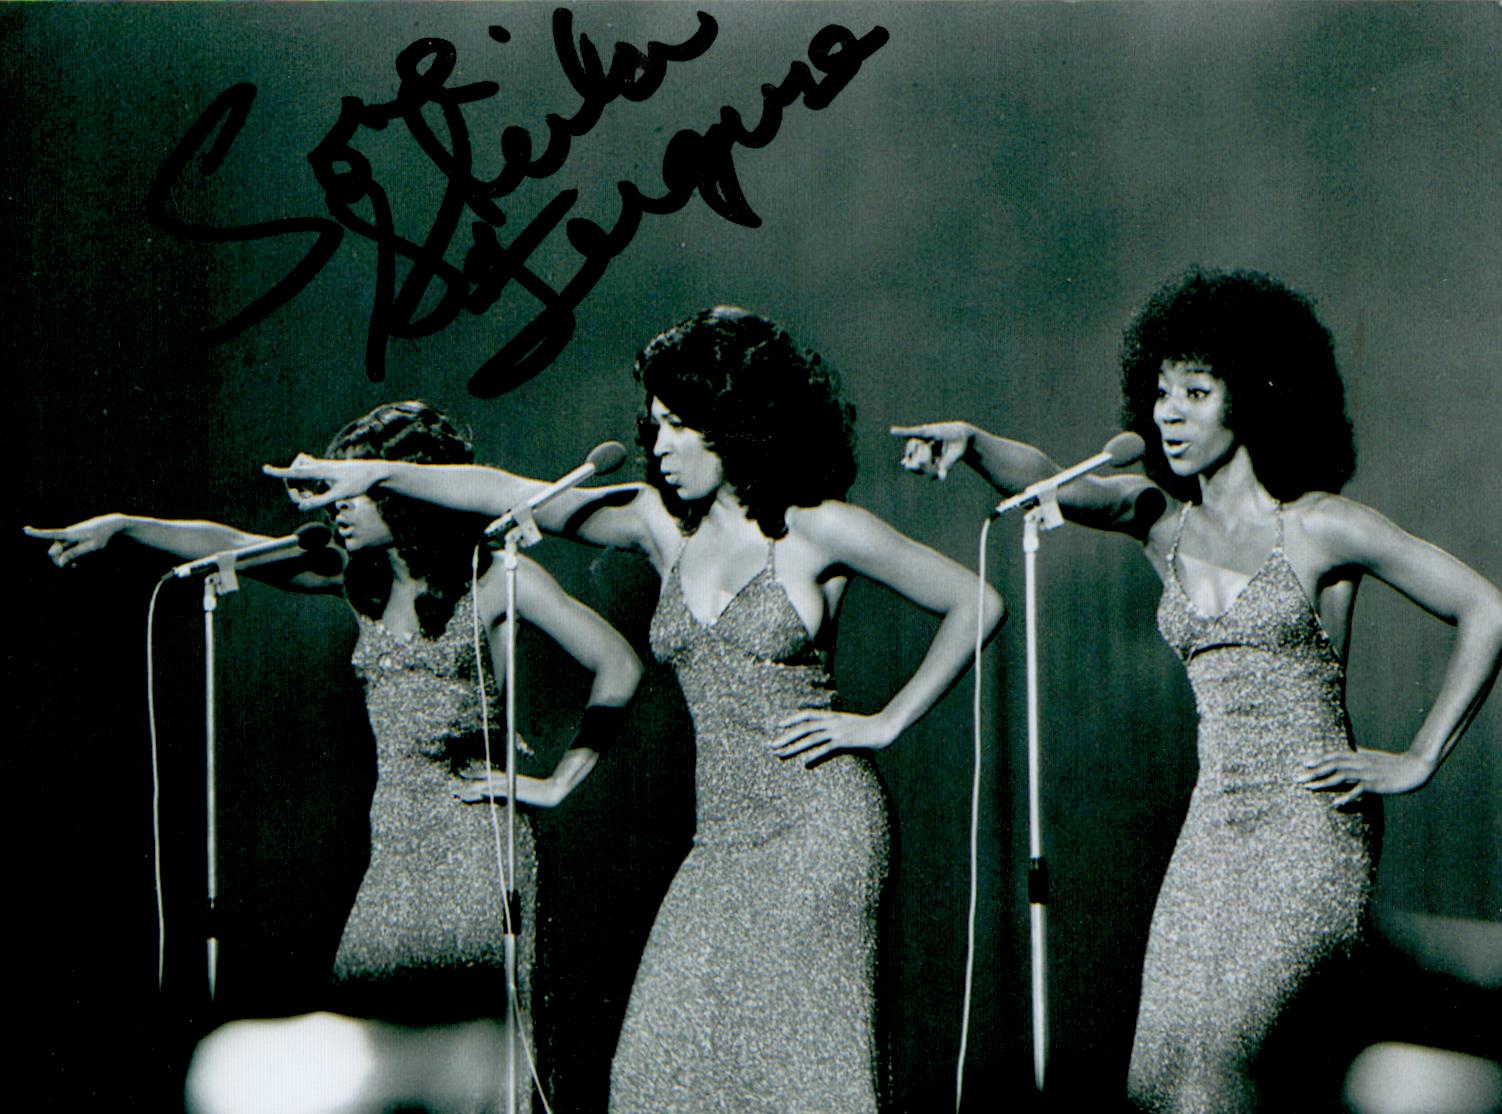 TV Film Sheila Ferguson signed 6x4 Three Degrees vintage black and white photo. Sheila Diana